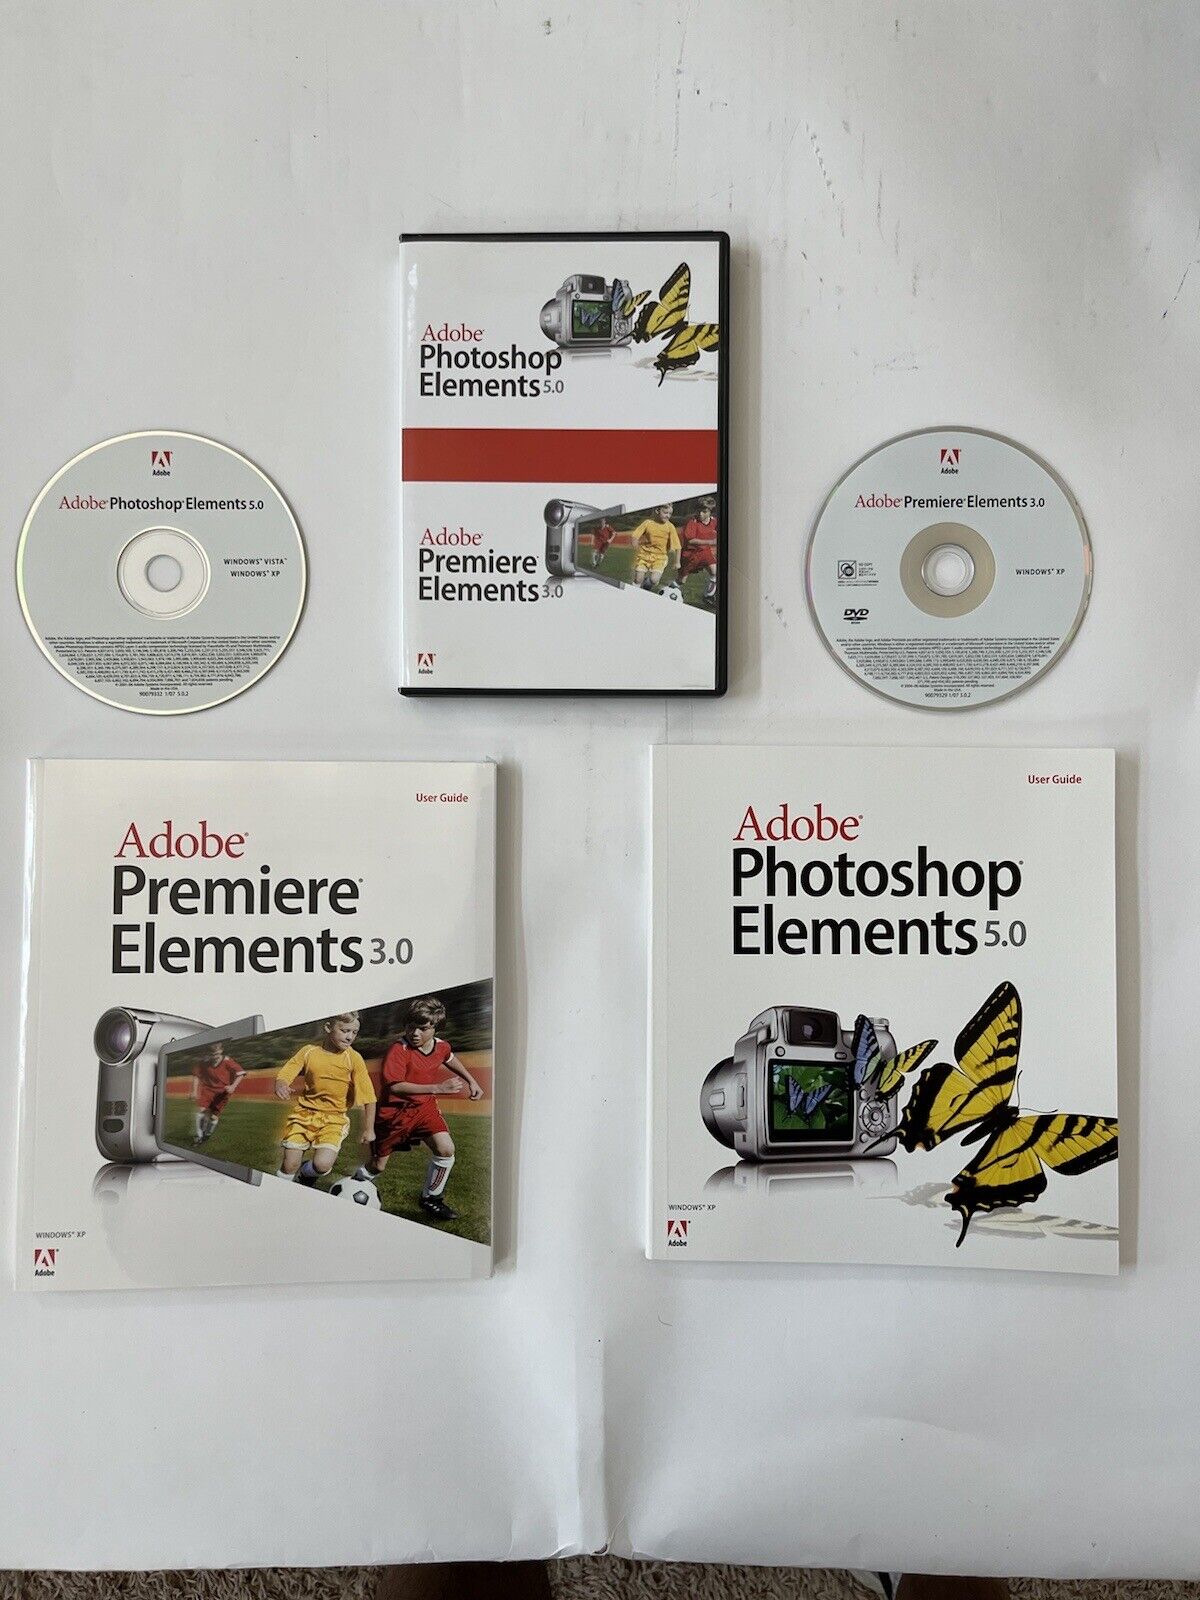  Adobe Premier Elements 3.0 2006 Adobe Photoshop Elements 5.0 w user guides 